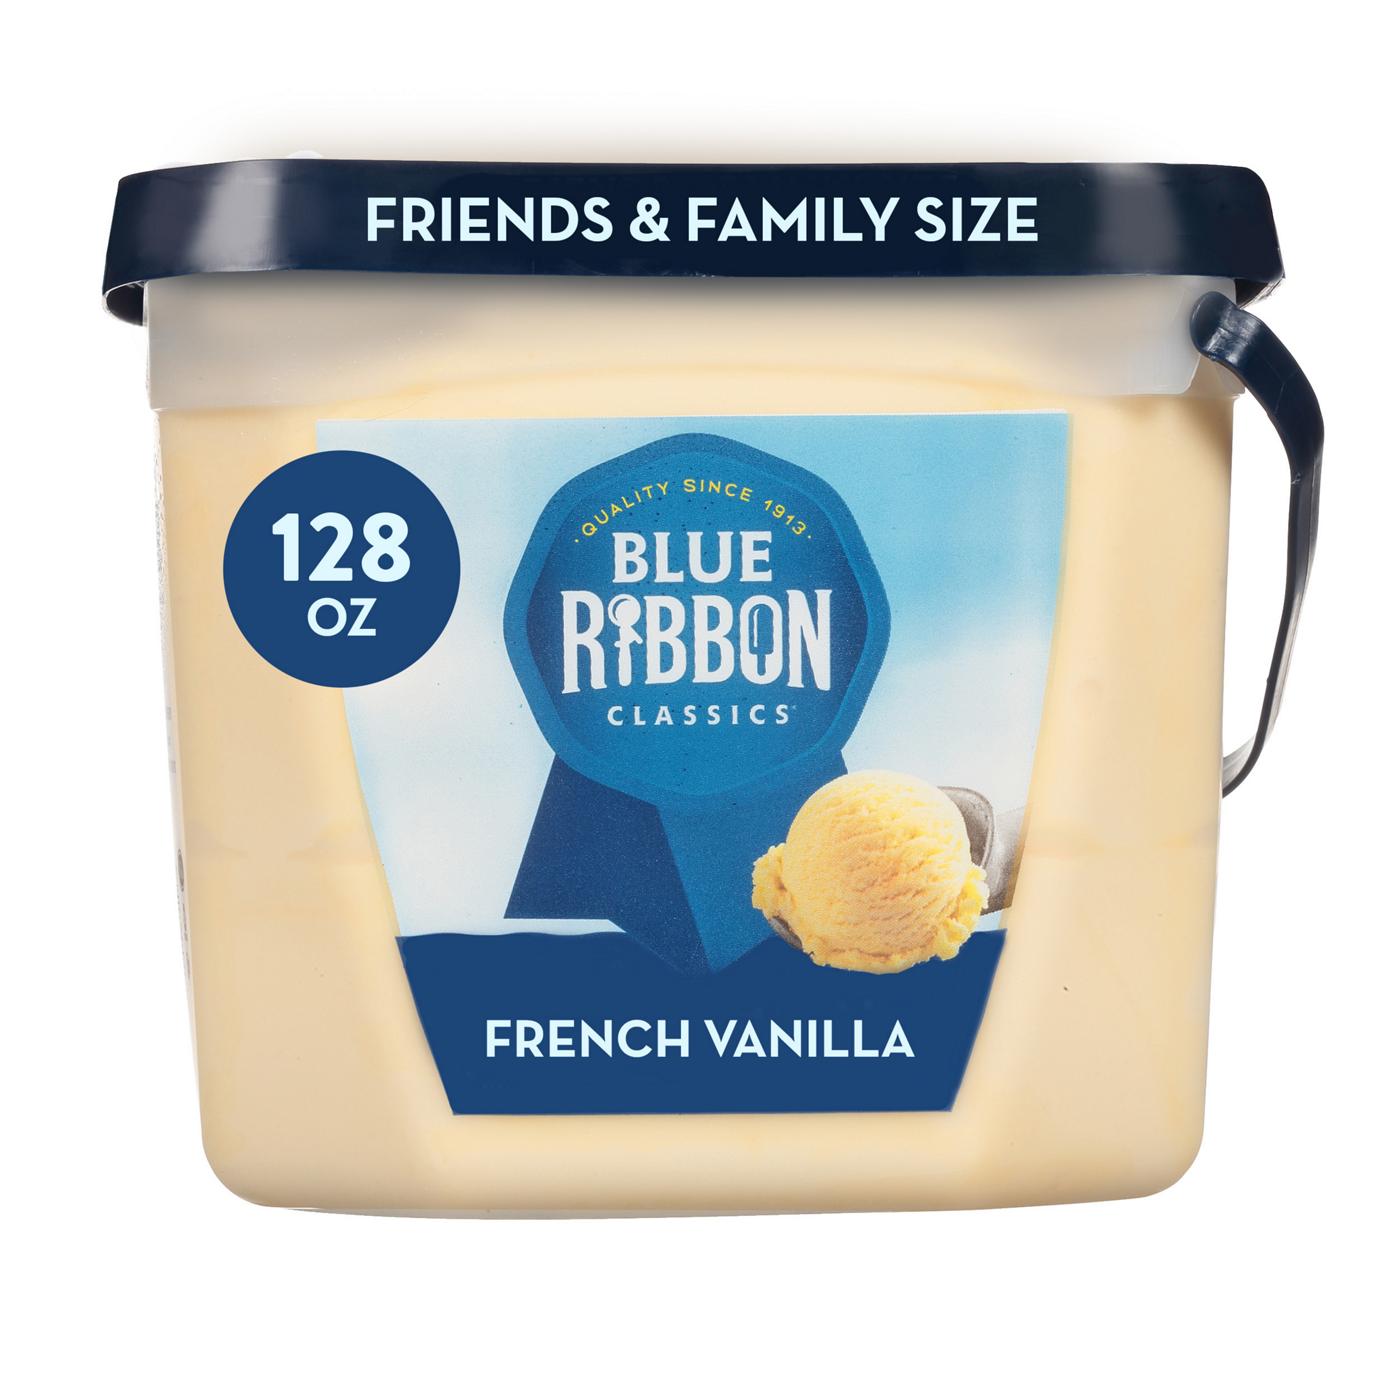 Blue Ribbon French Vanilla Ice Cream; image 1 of 2